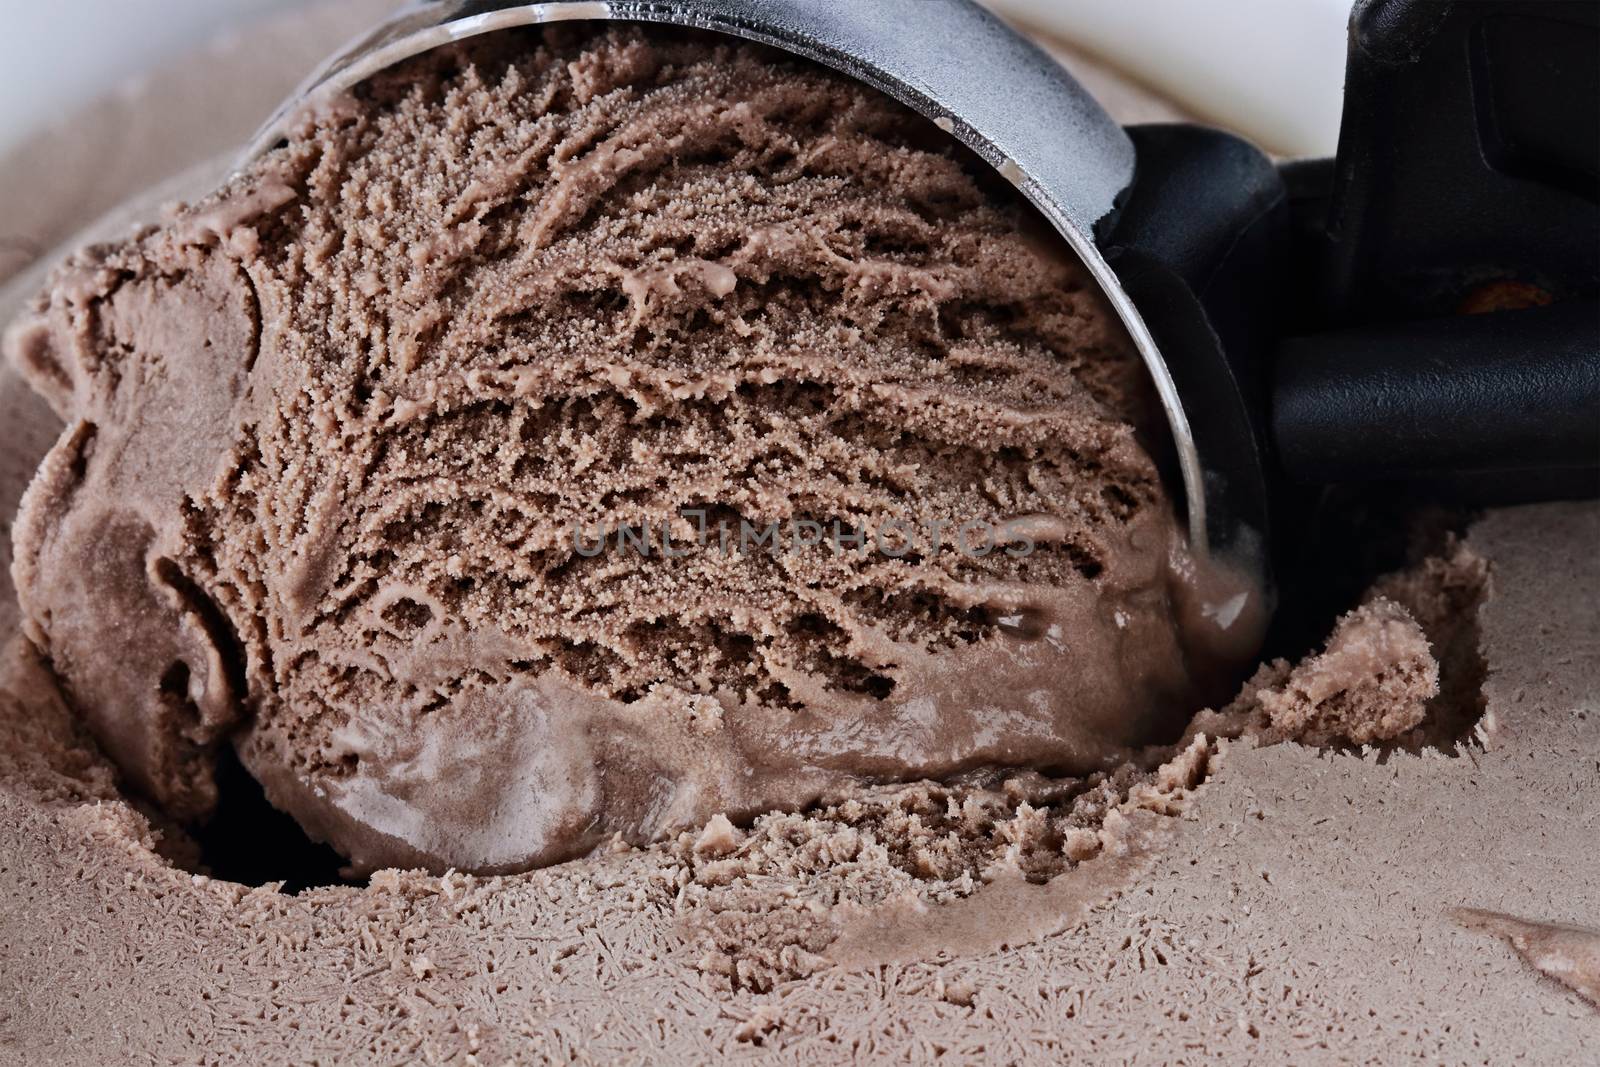 Scoop of Chocolate Ice Cream by StephanieFrey